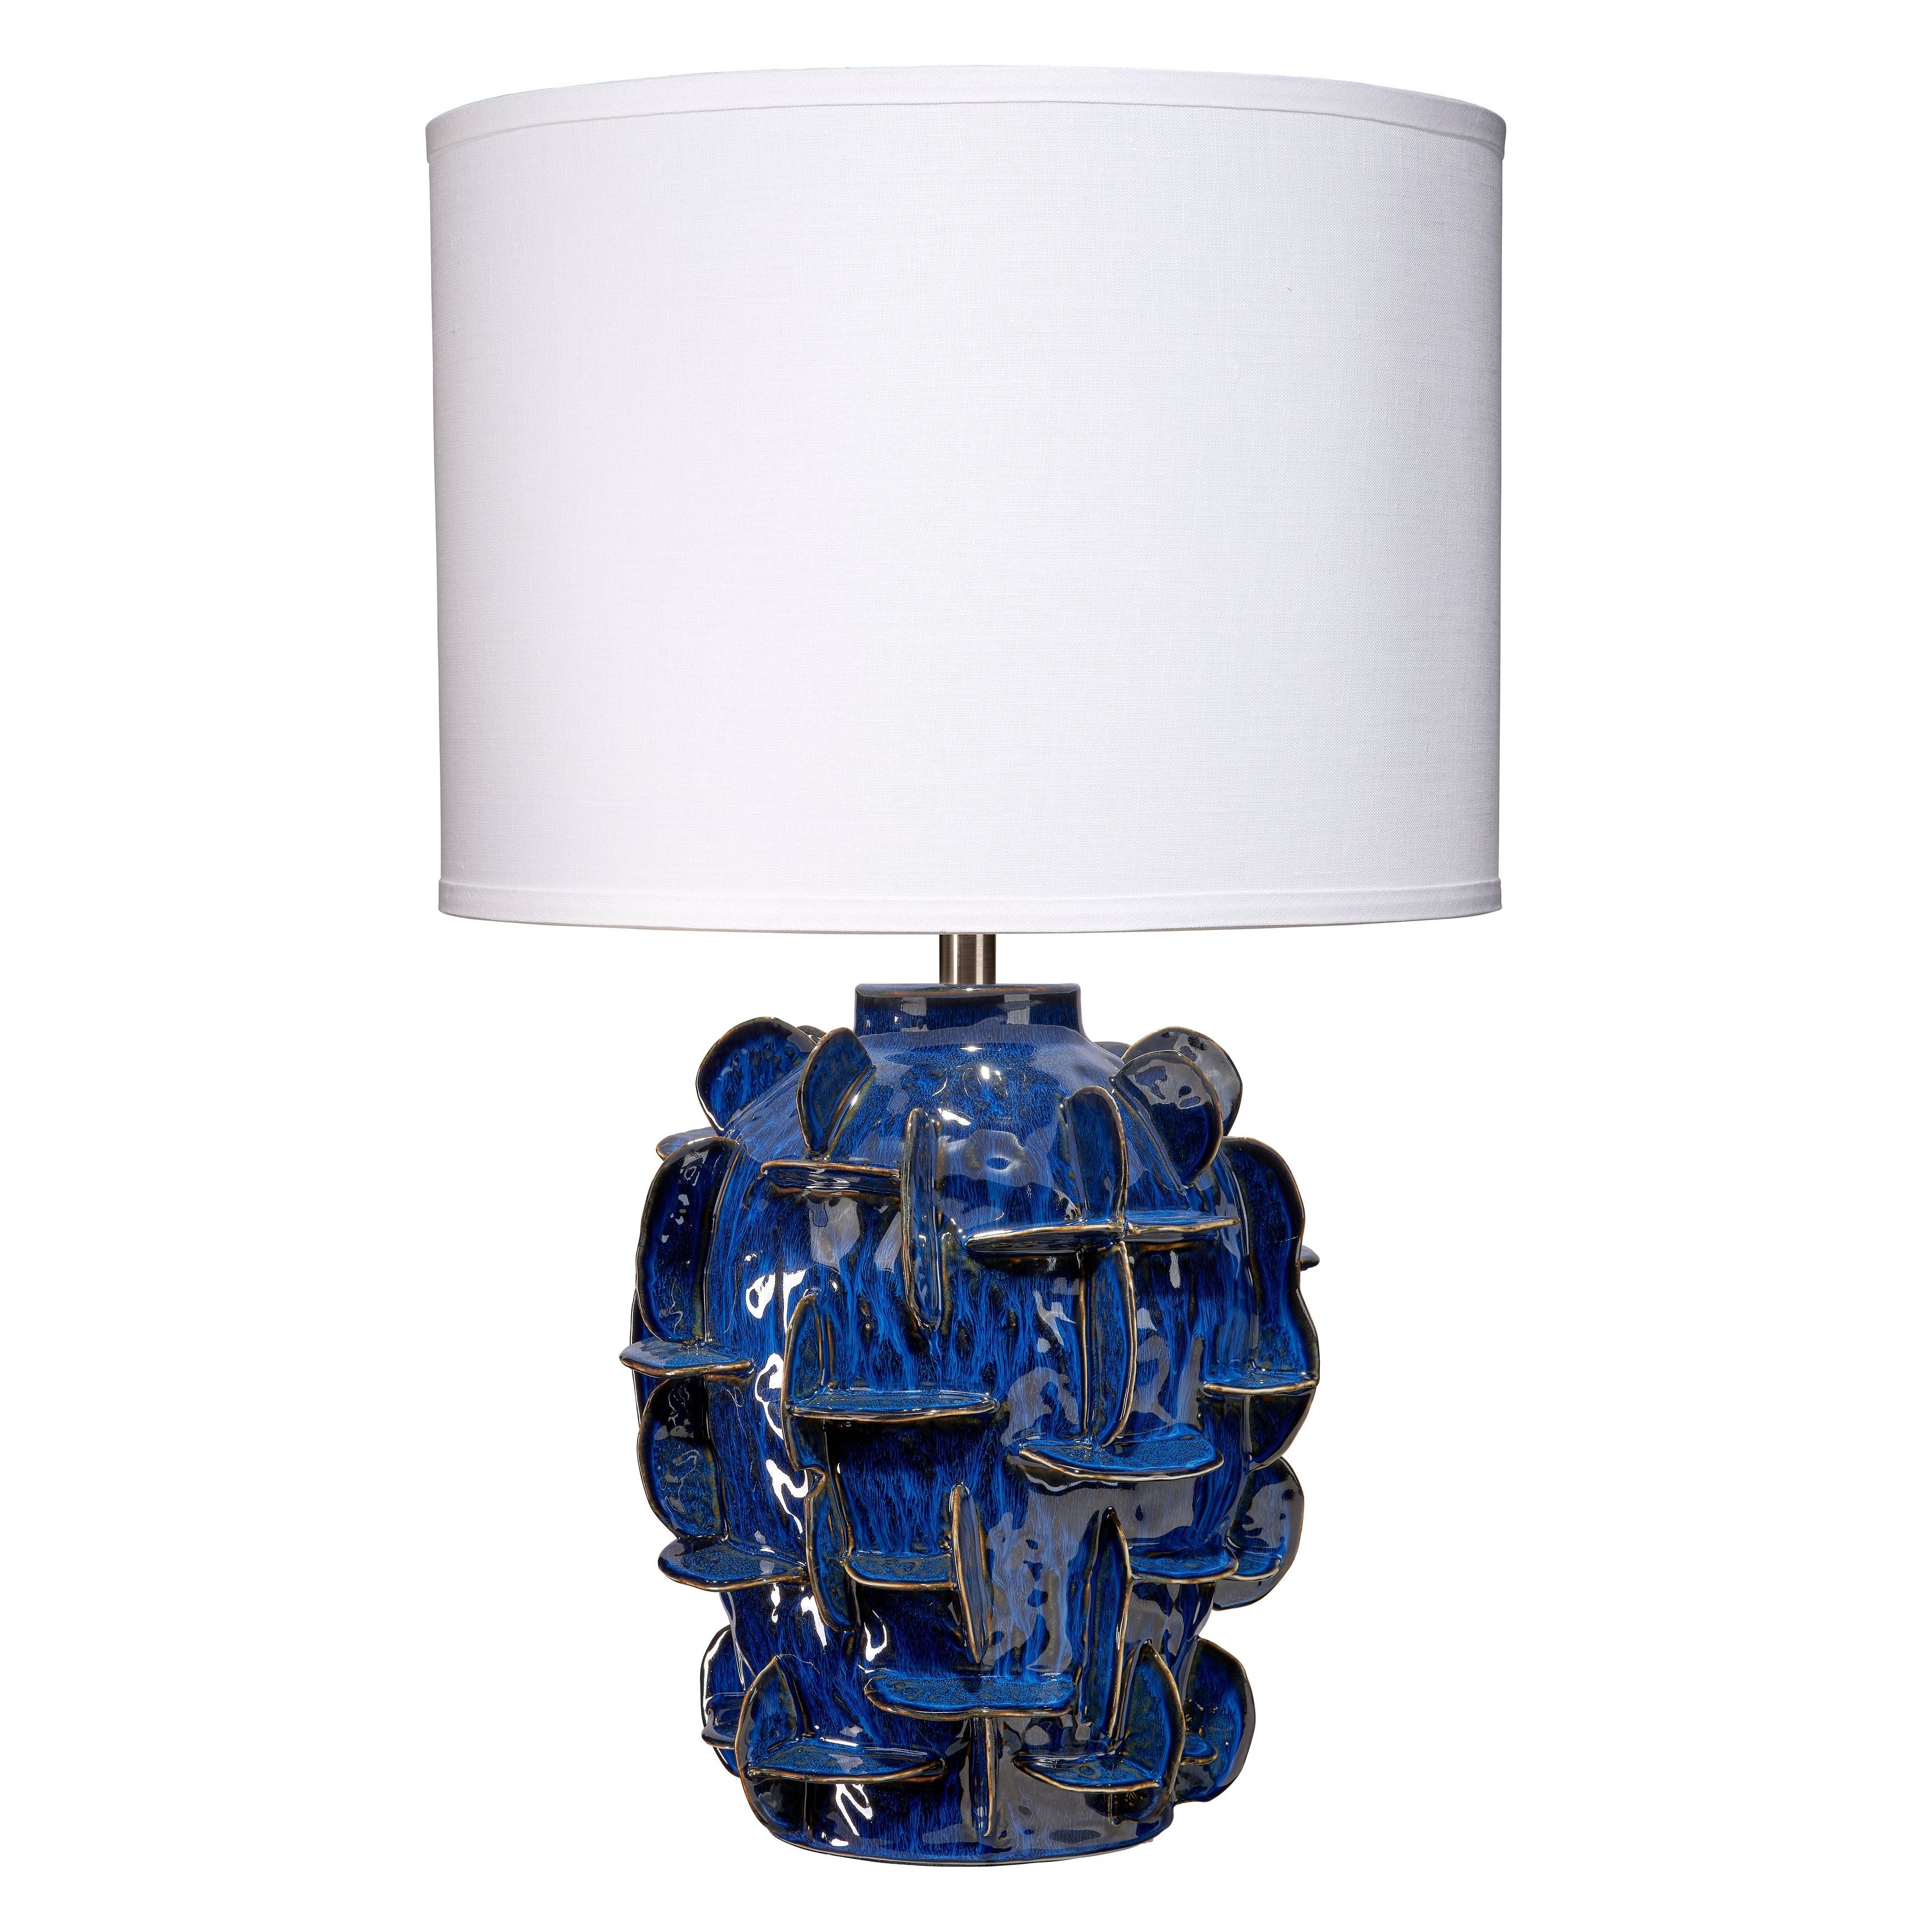 Jamie Young Company - 9HELIOSTLCO -  Helios Table Lamp - Helios - Cobalt Blue